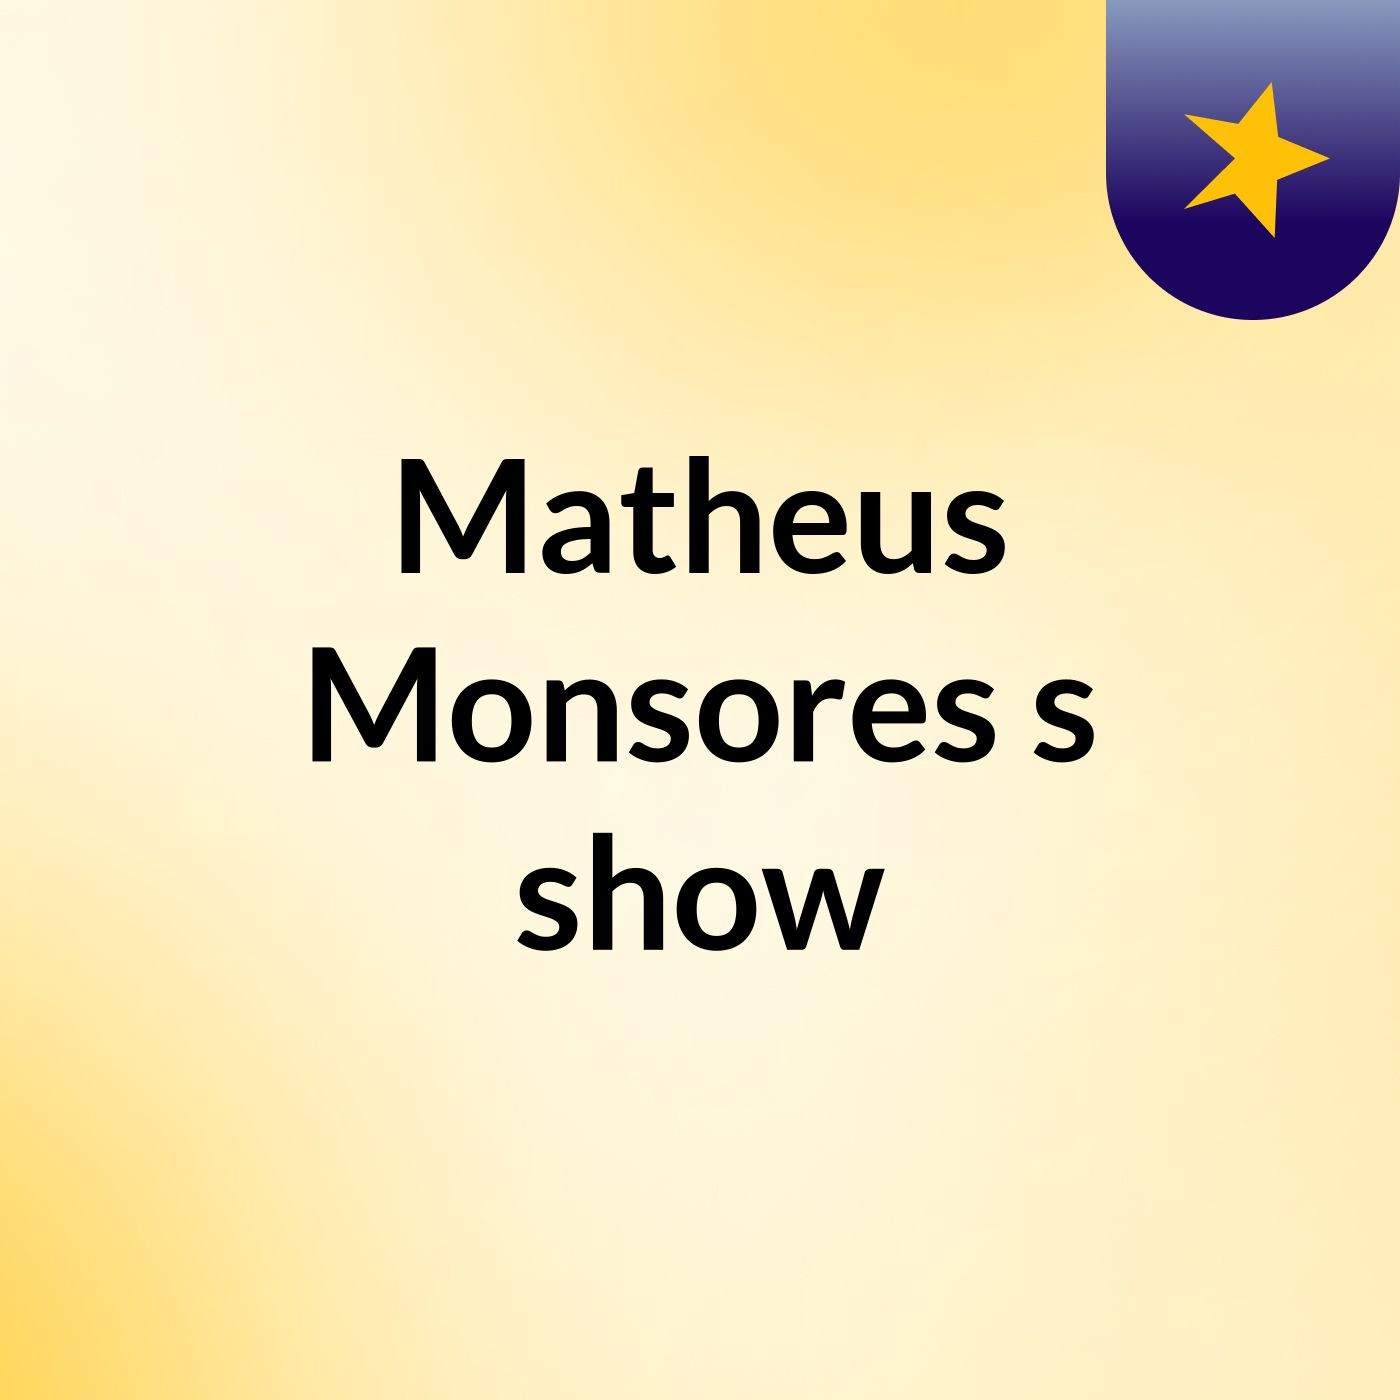 Matheus Monsores's show